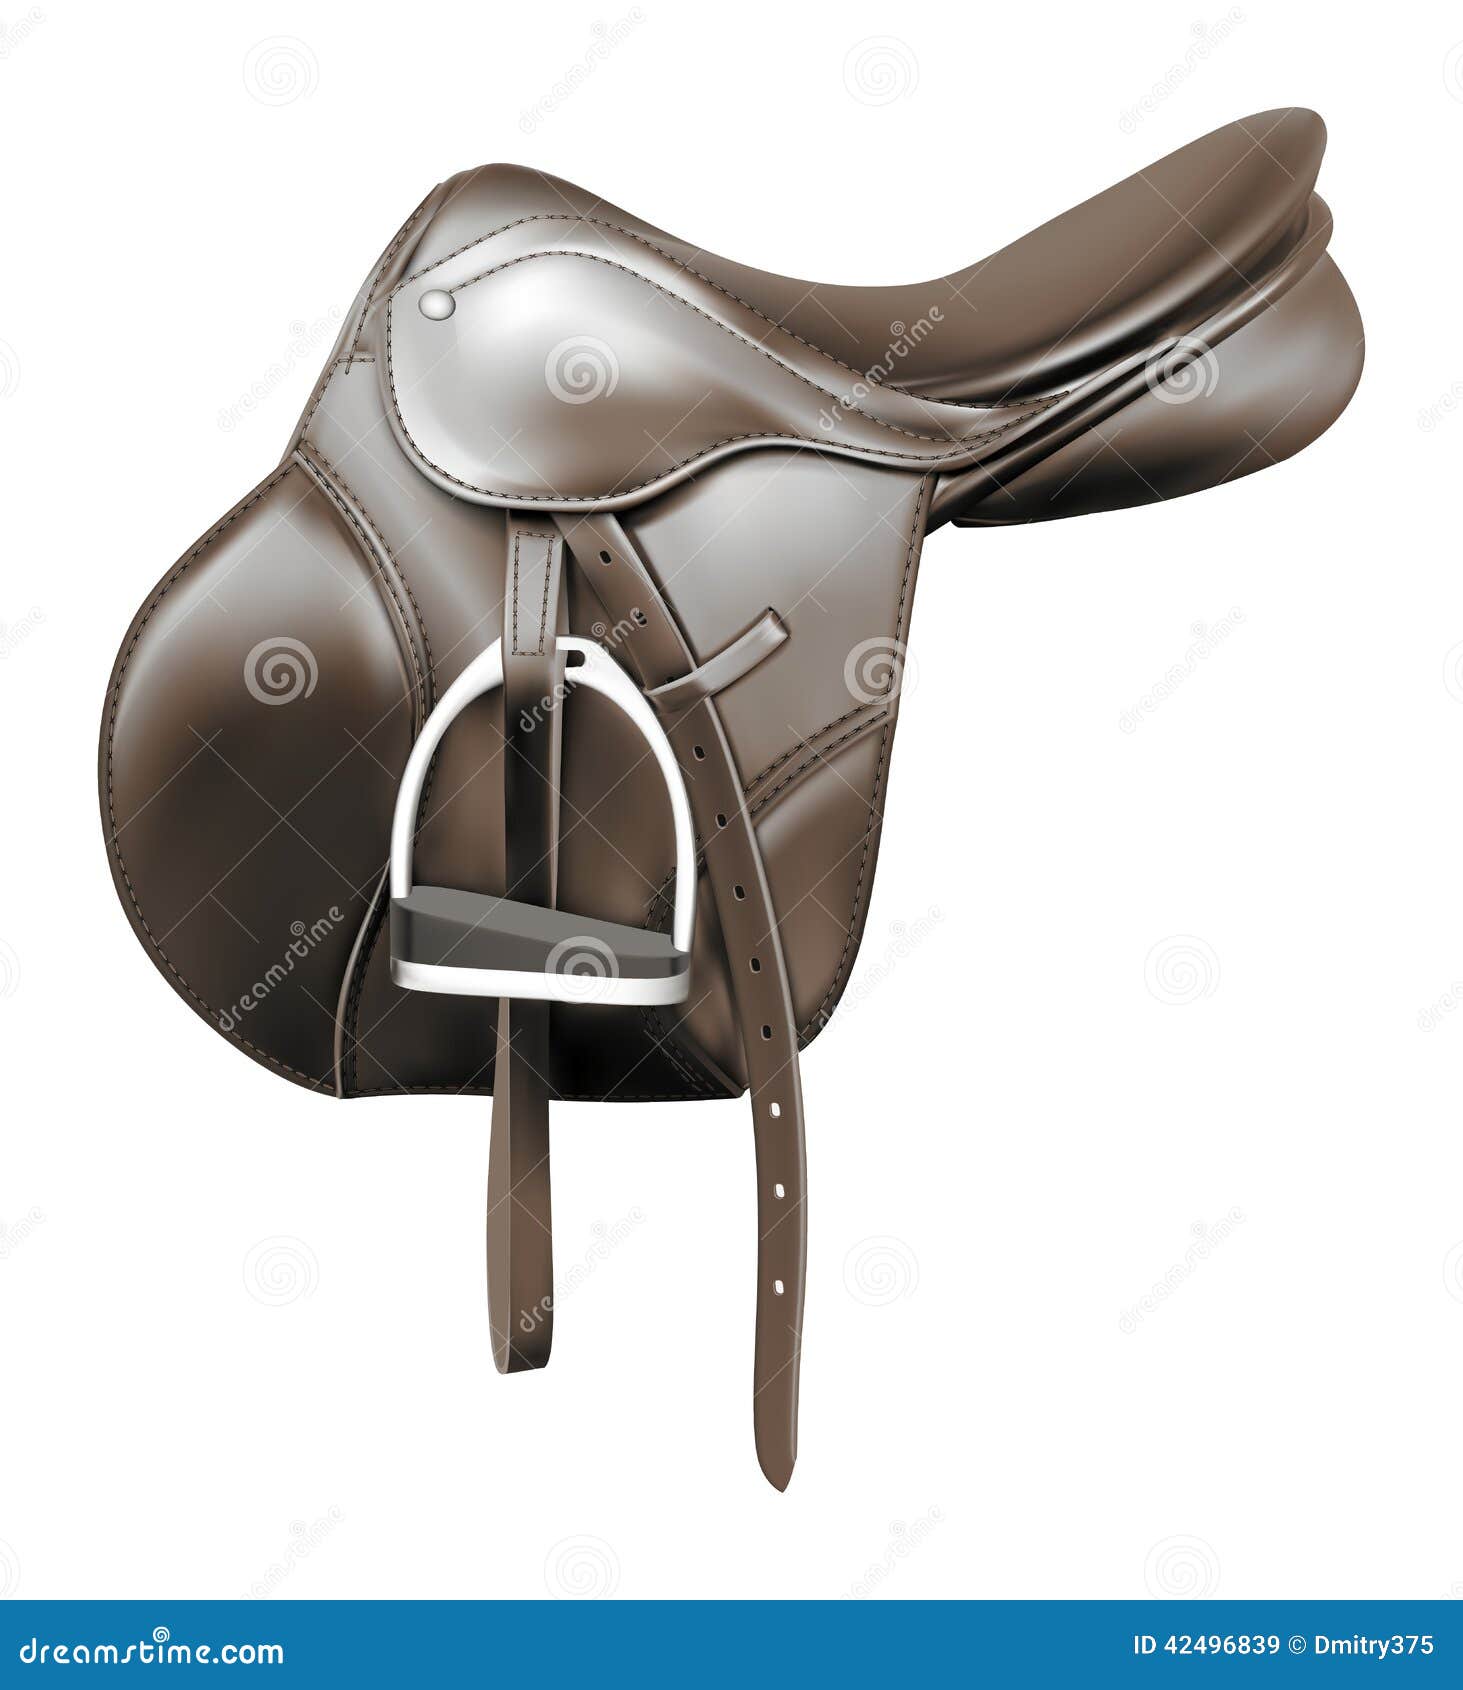 leather equestrian saddle